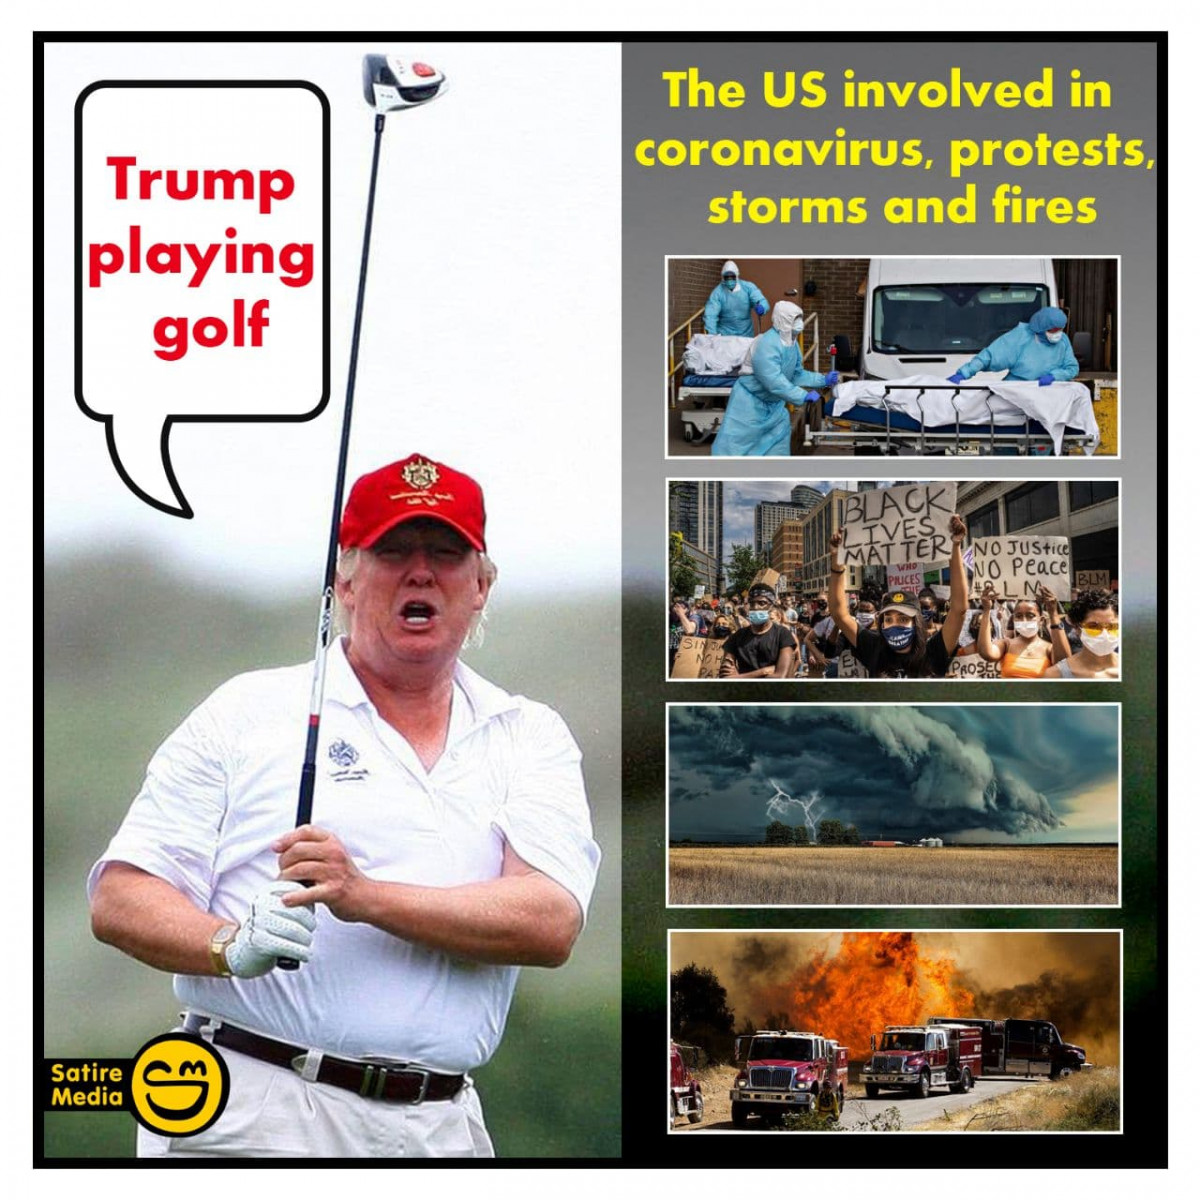 Trump playing golf